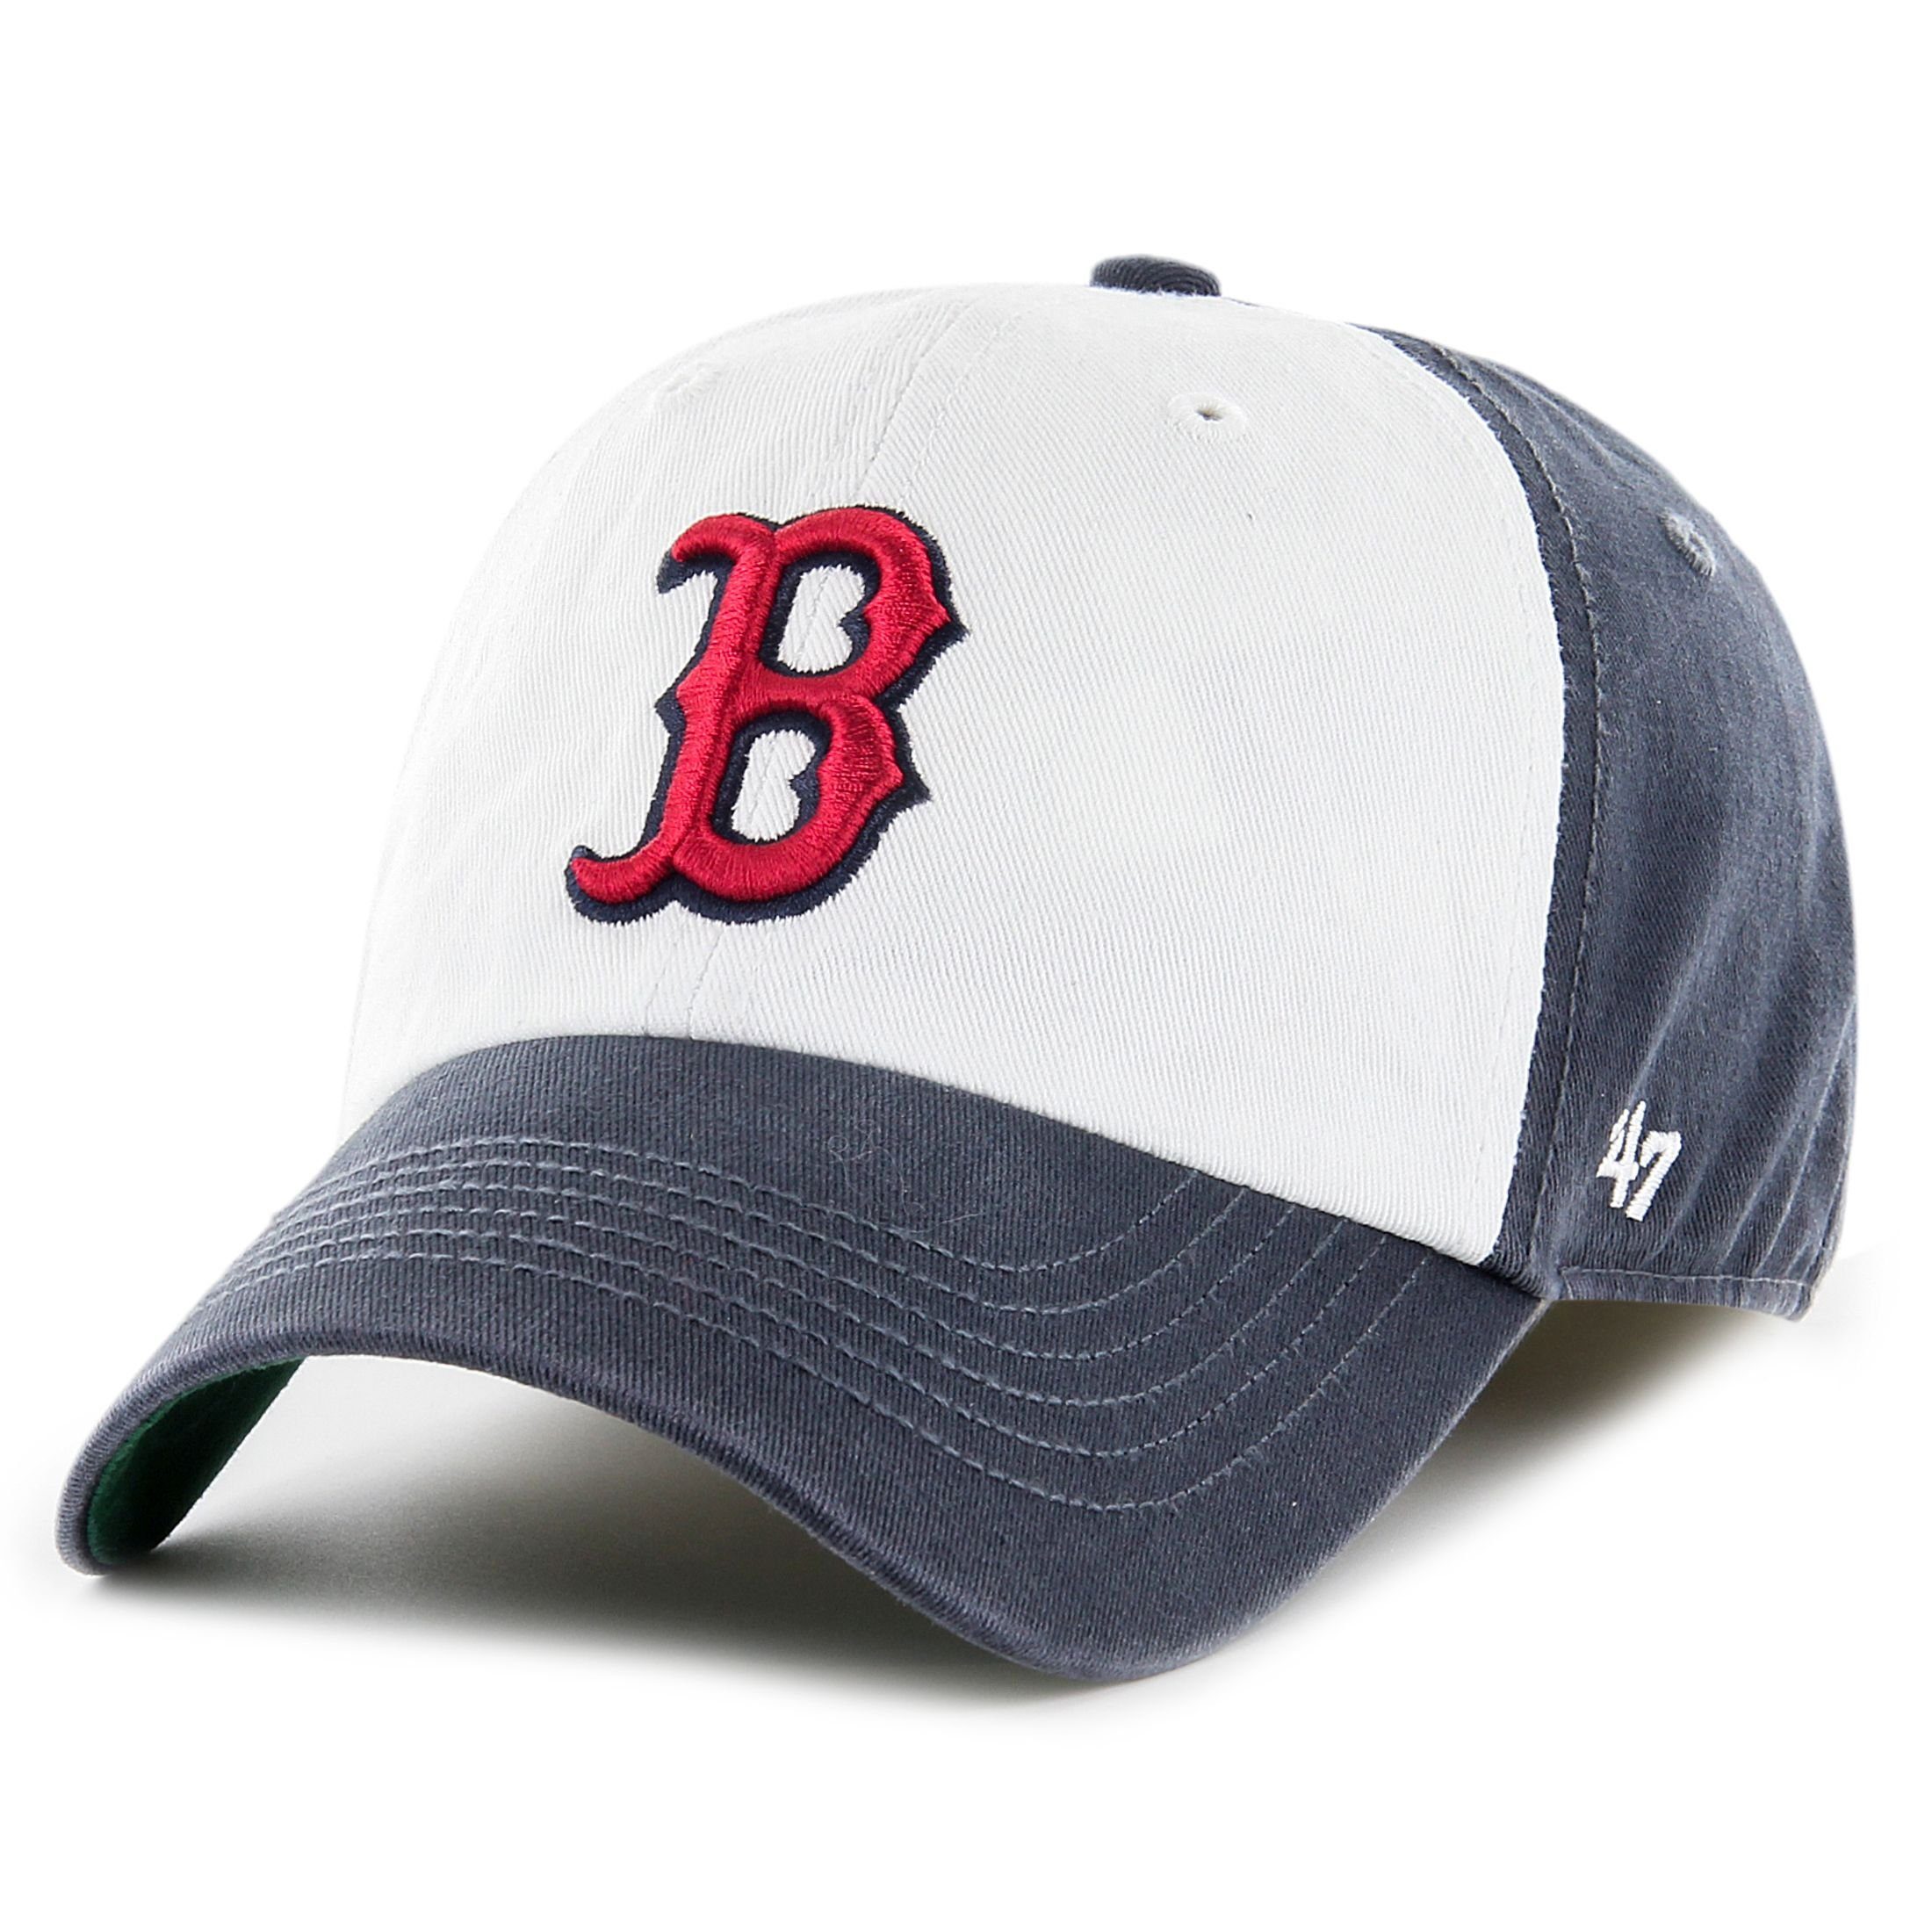 Red Cap Boston FRESHMAN Flex '47 Franchise Sox Brand